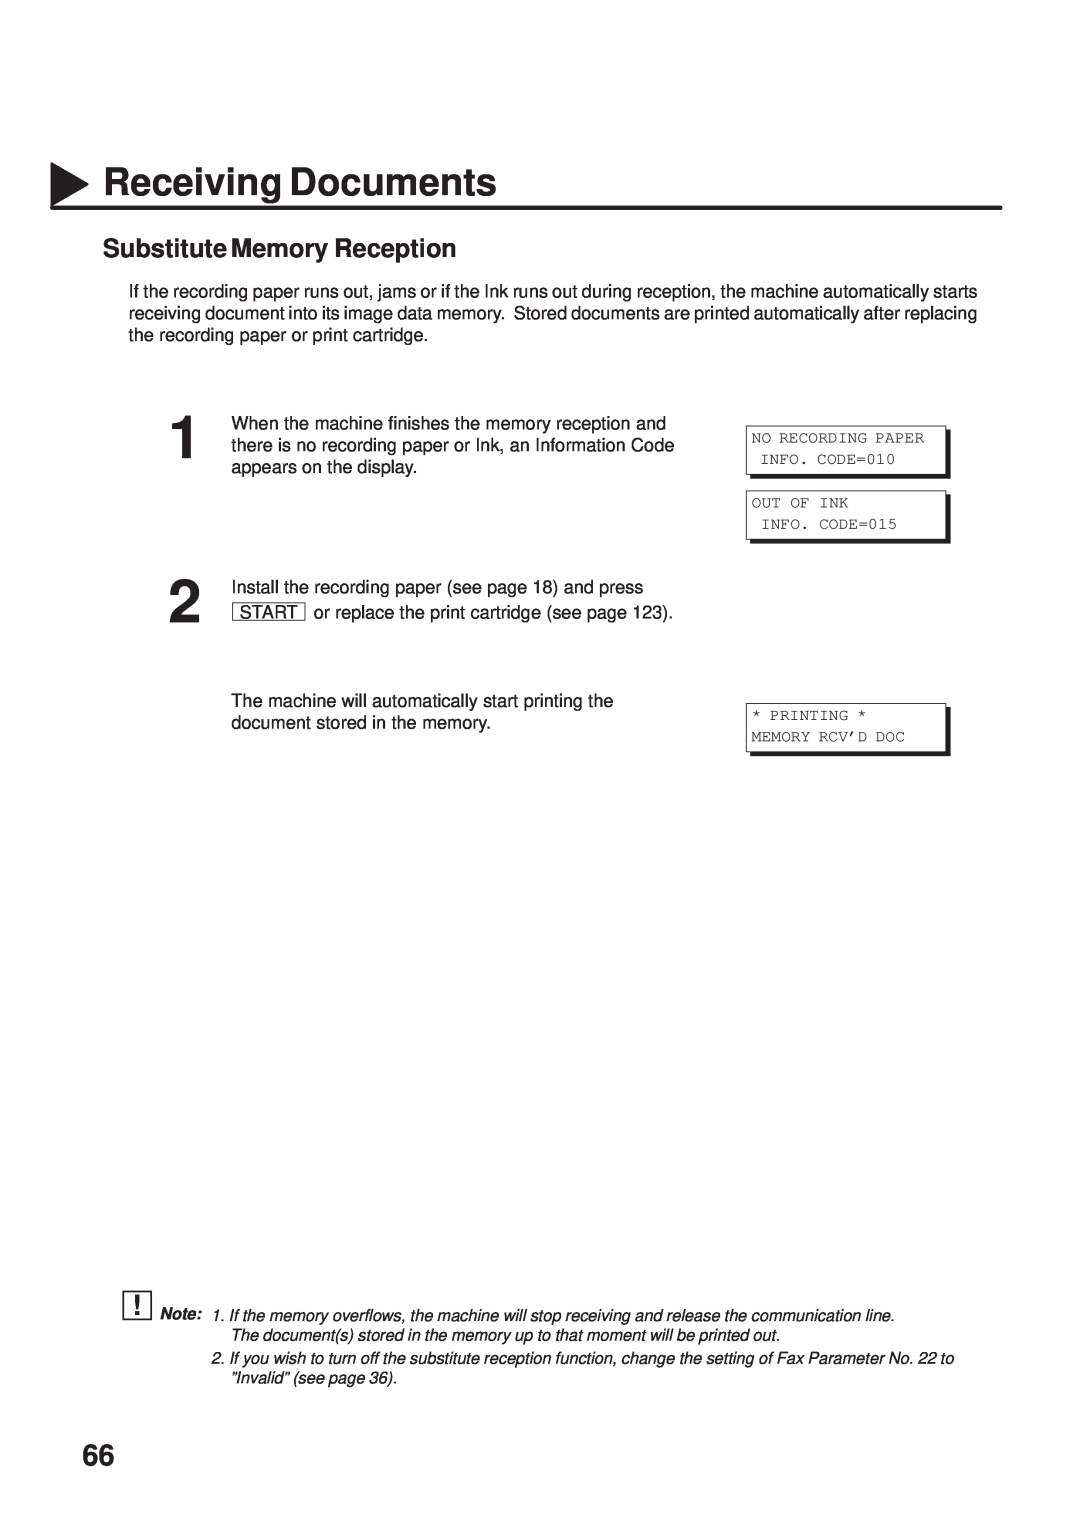 Panasonic UF-333 manual Substitute Memory Reception, Receiving Documents, Printing Memory Rcvd Doc 